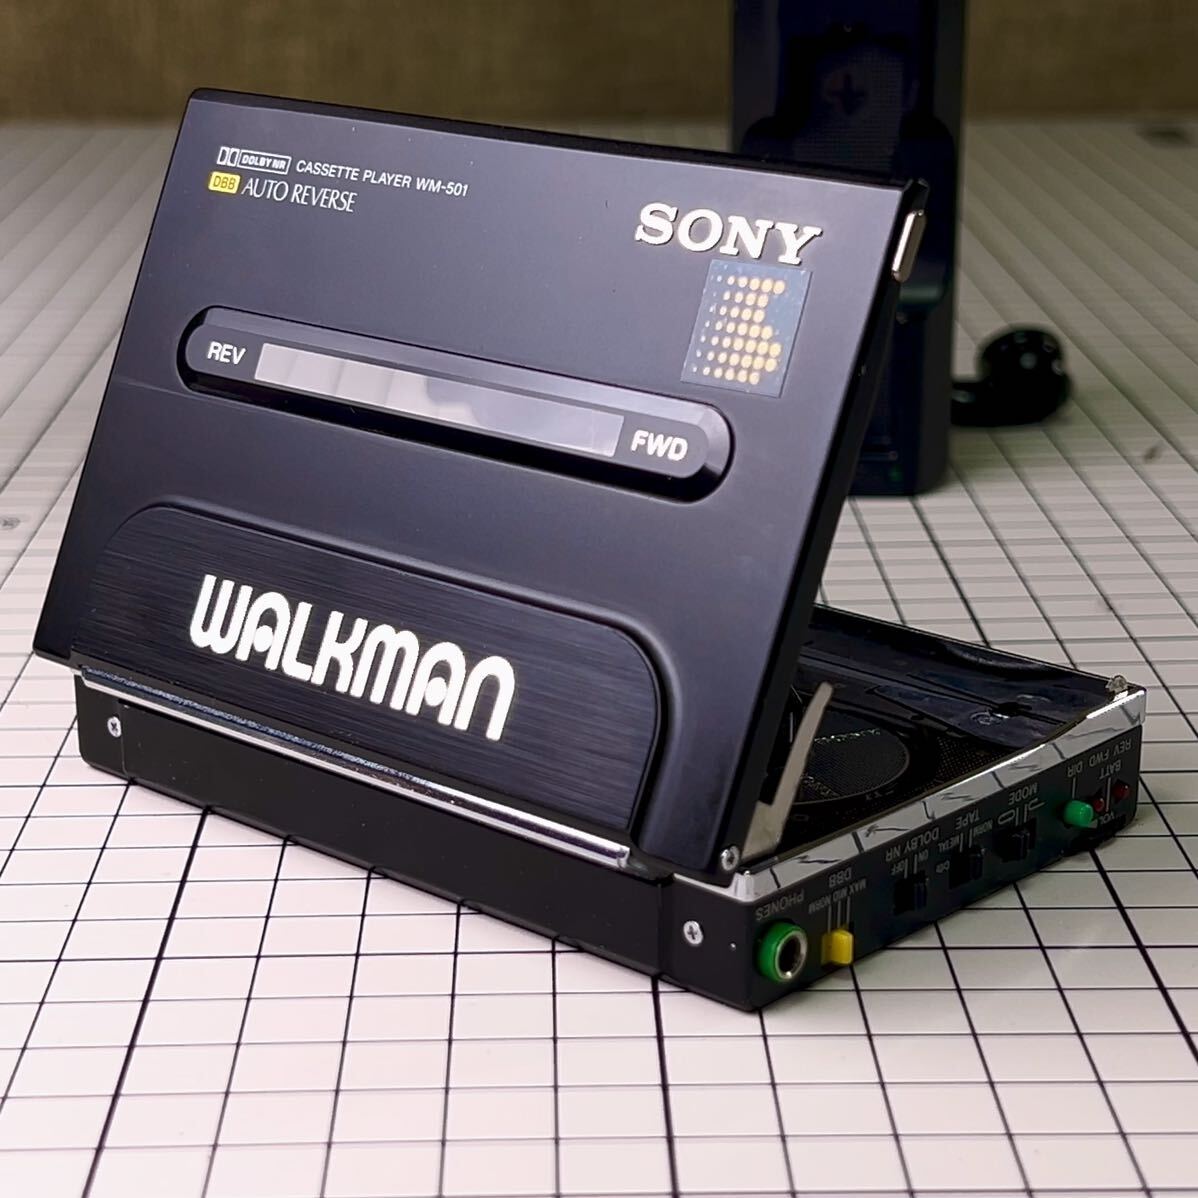  service completed finest quality goods WM-501 WALKMAN SONY Walkman Sony cassette Walkman 